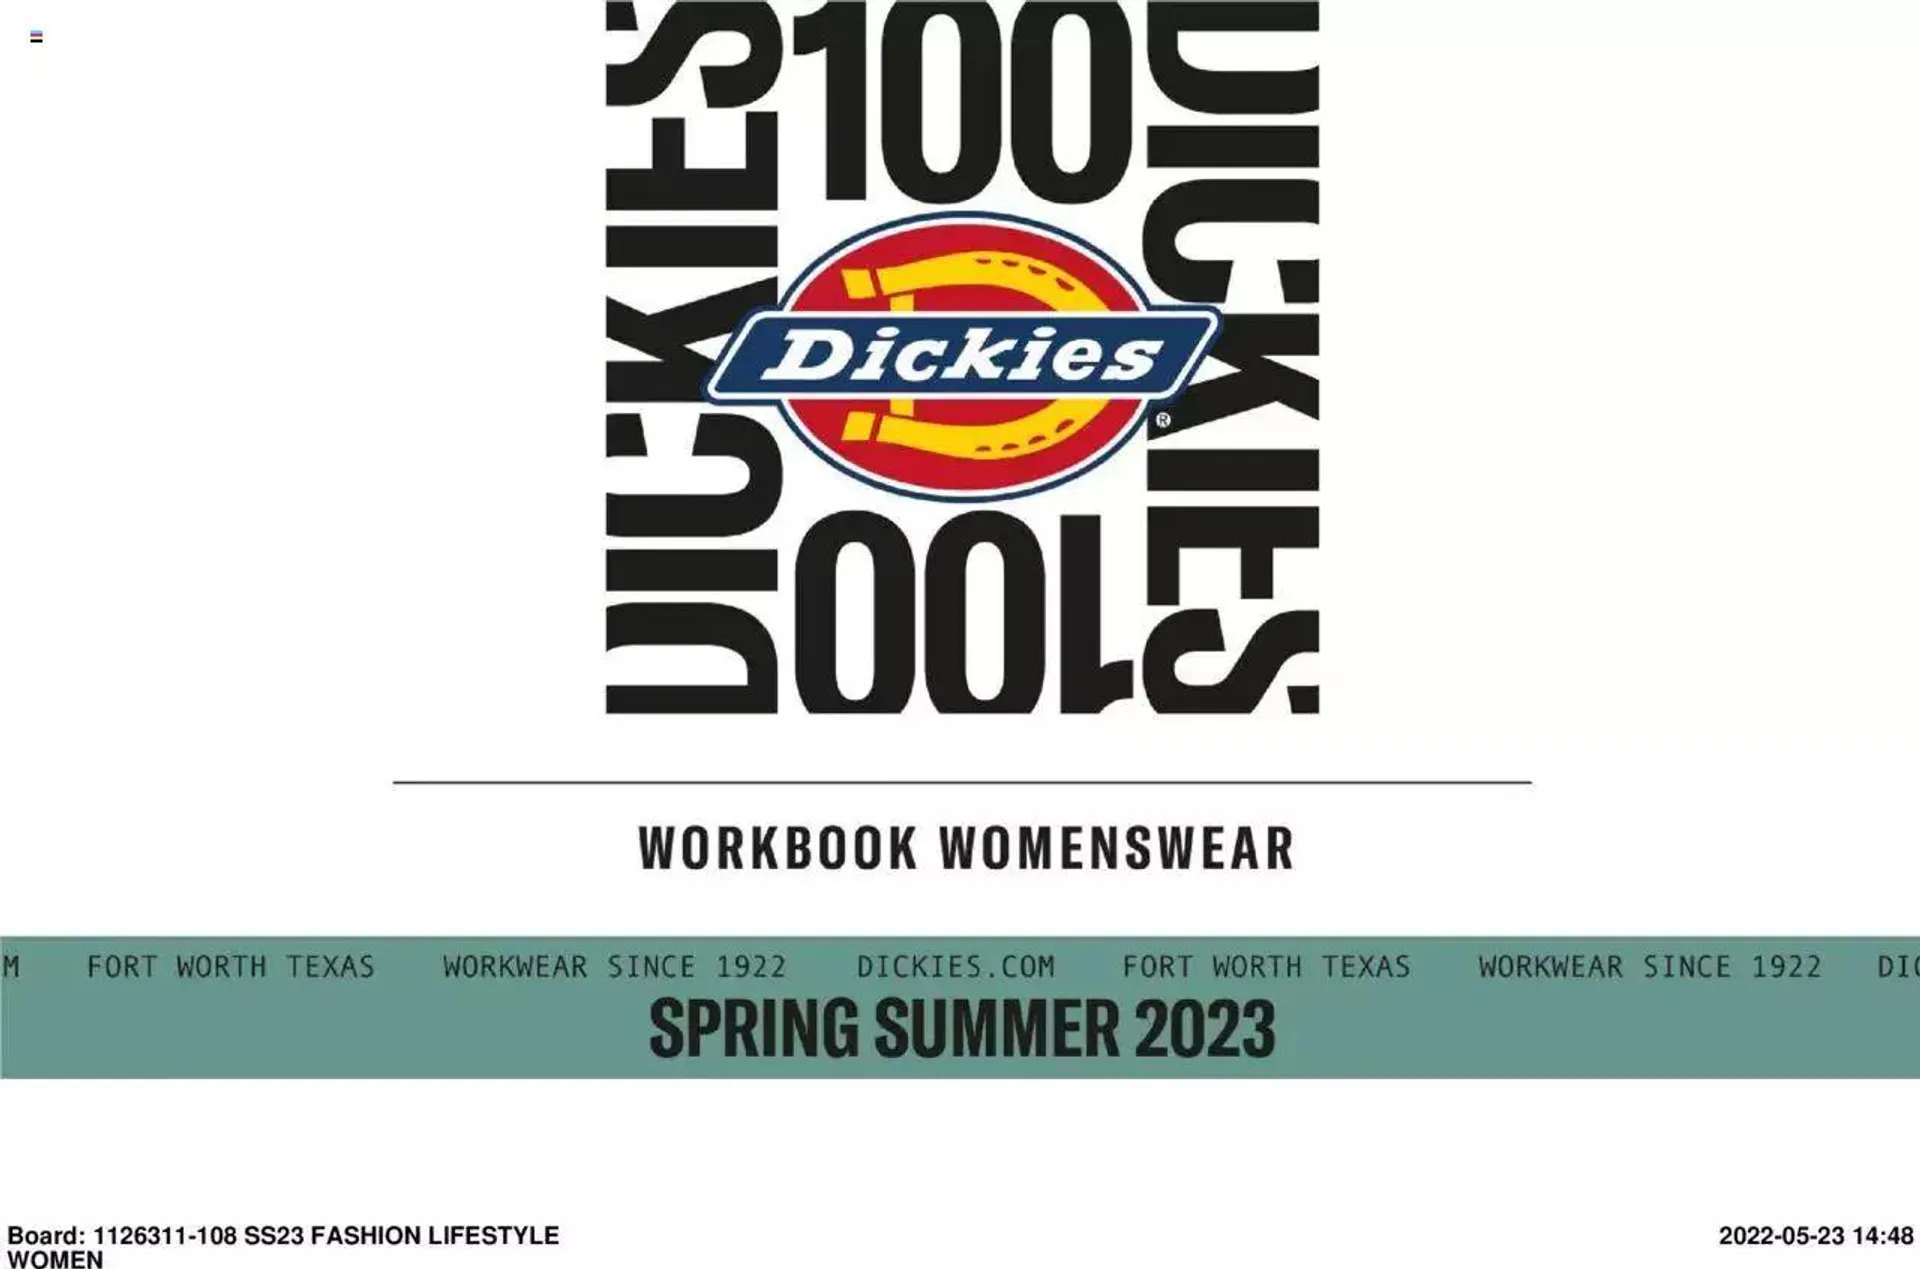 Dickies - Womenswear Workbook - 107